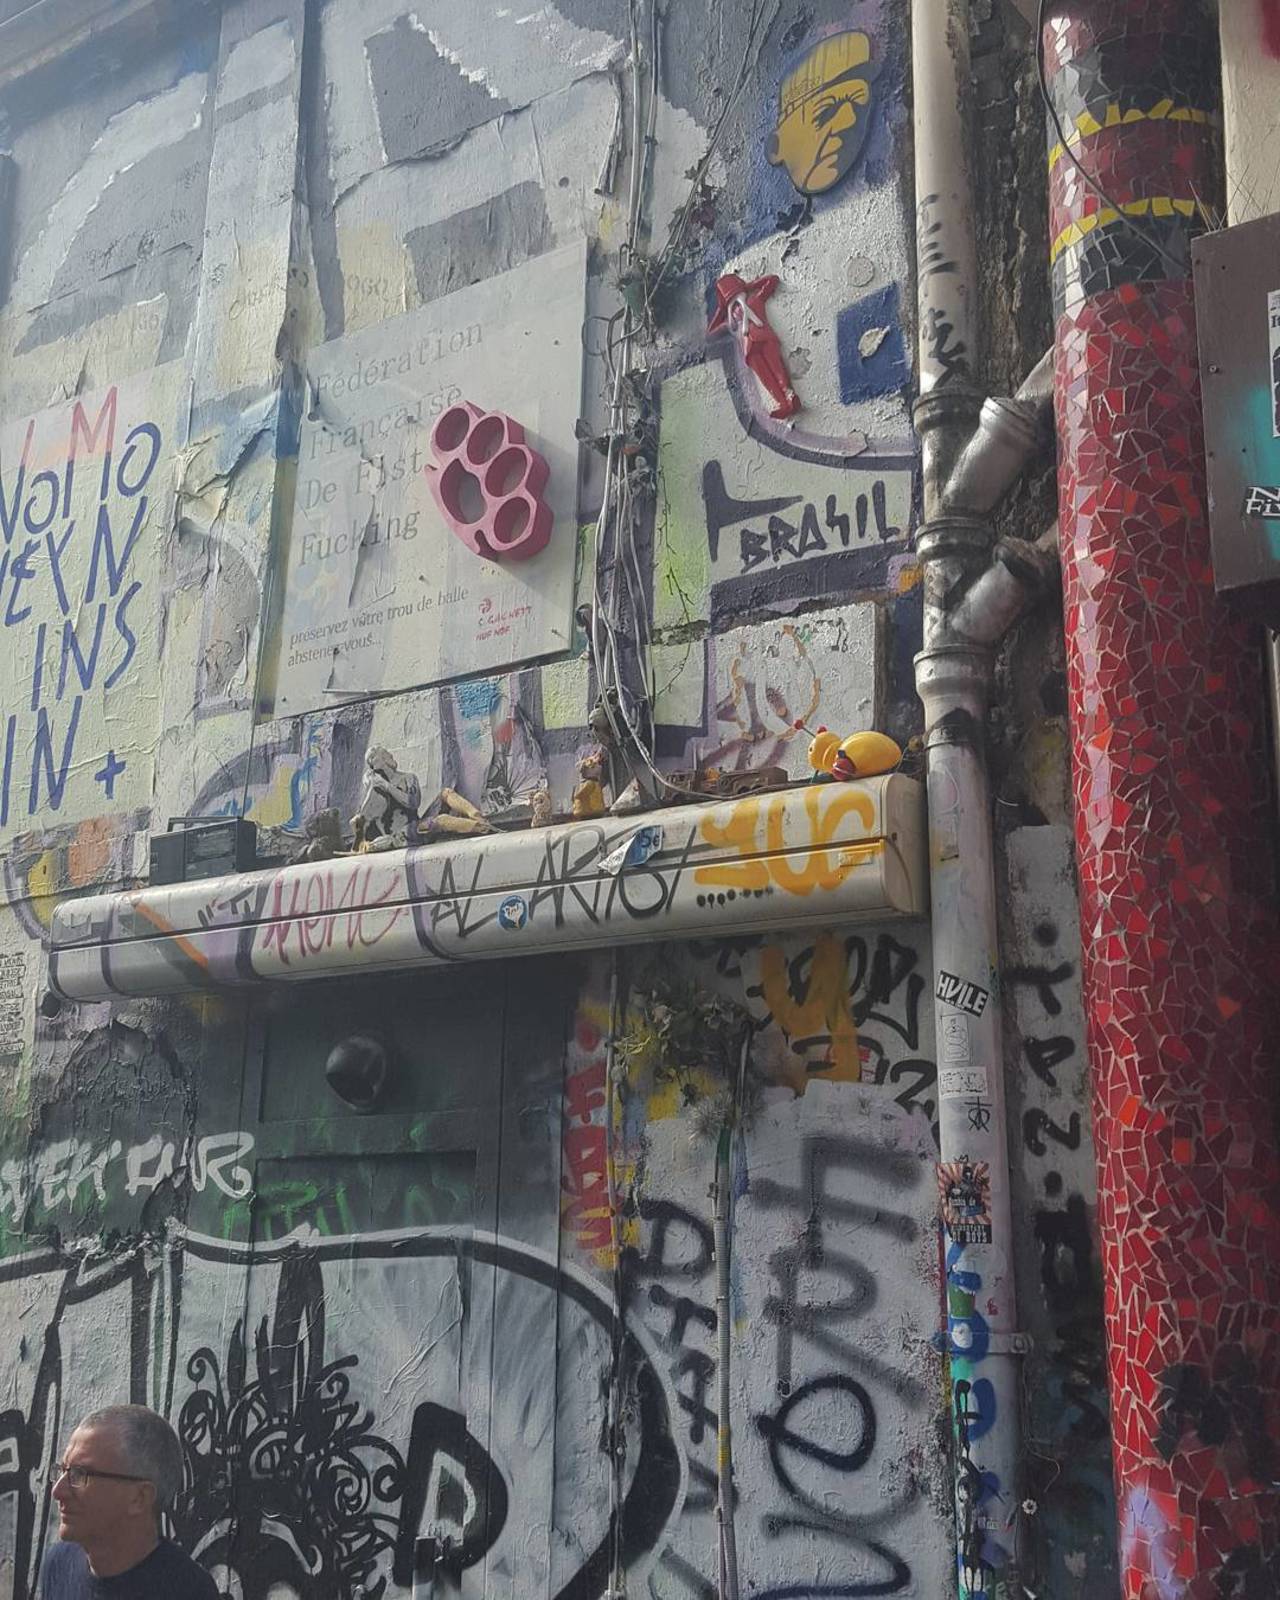 #Paris #graffiti photo by @jdewey67 http://ift.tt/1KWZHhR #StreetArt http://t.co/5knhCyavrP